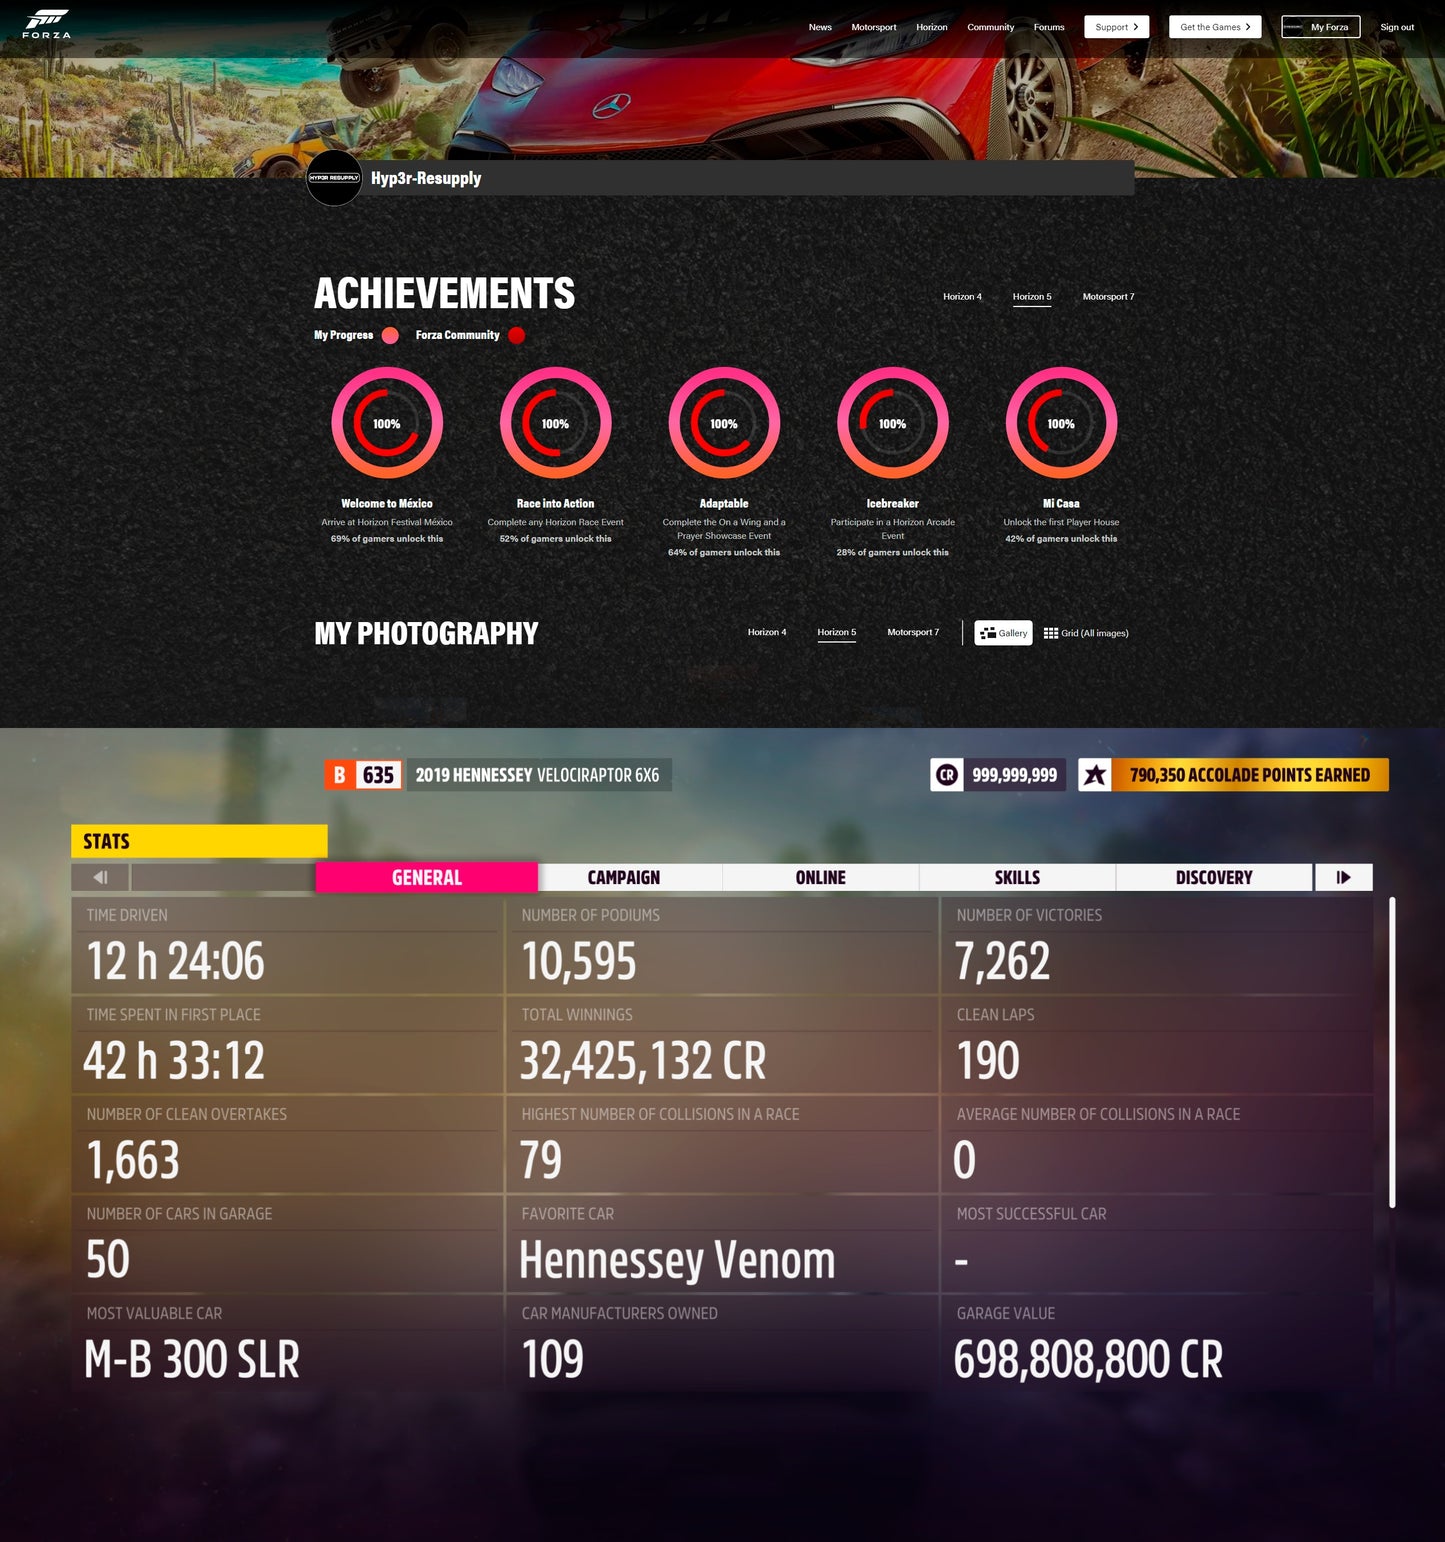 Forza Horizon 5 Modded Account - [All Cars + 999.999.999: Credits & Super Wheelspin & Wheelspin & Car Master (Skill) Points & Forzathon Points + Level + 100% Progress]